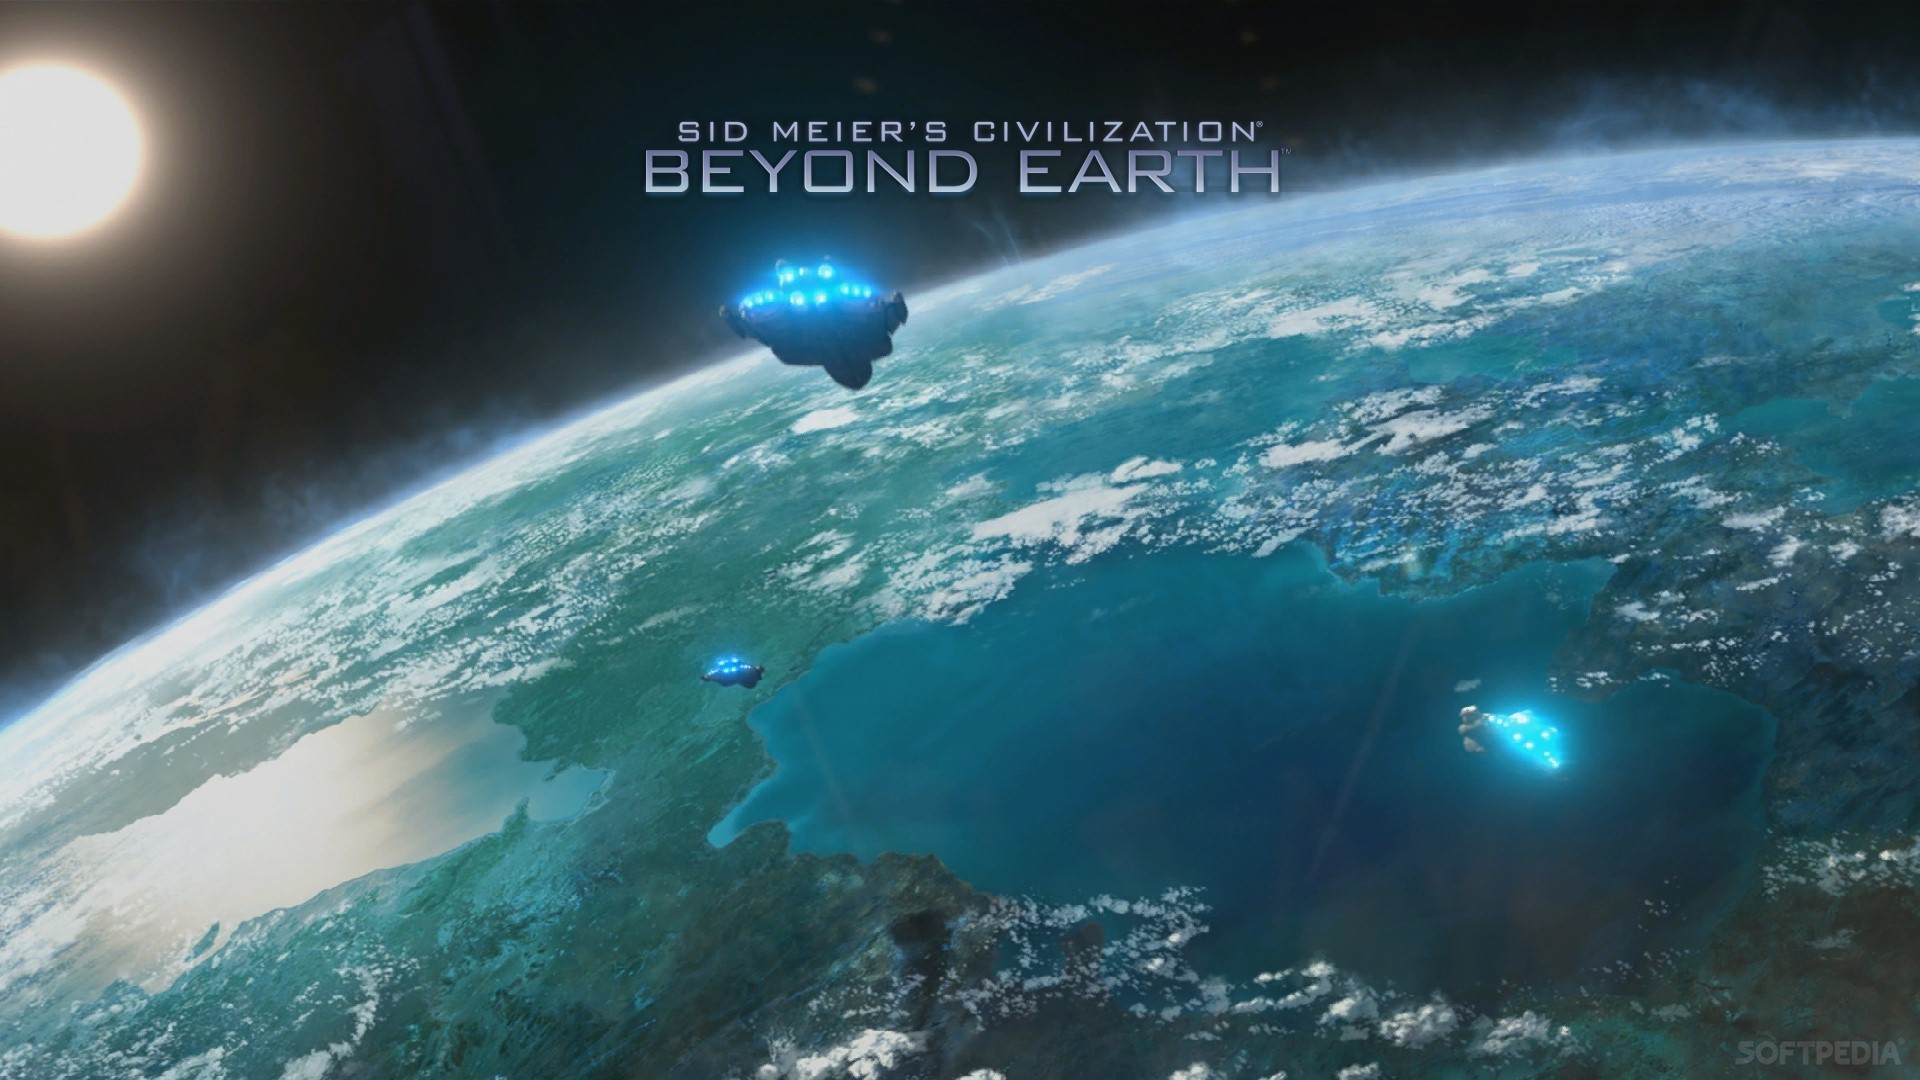 720p civilization beyond earth images